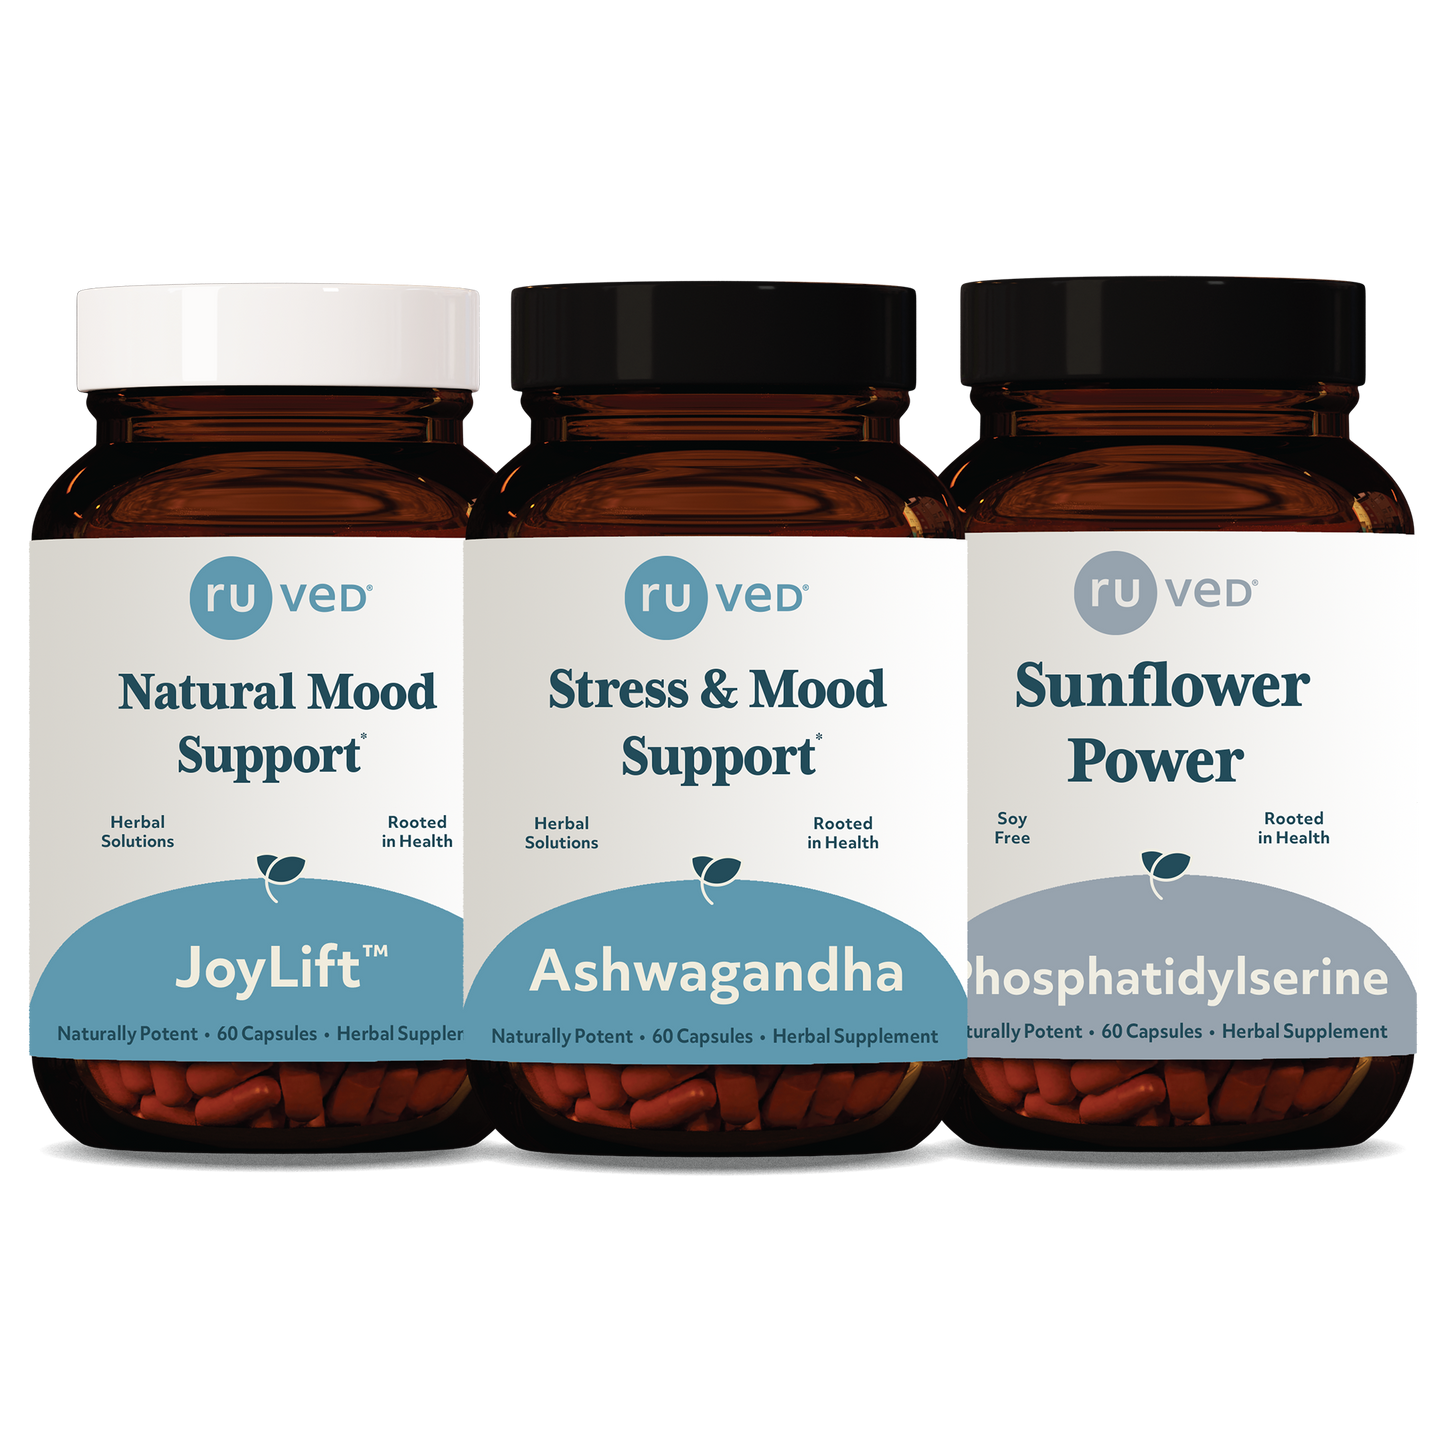 Joylift Ashwagandha & Phosphatidylserine bundle Bottles front by ruved herbal supplements